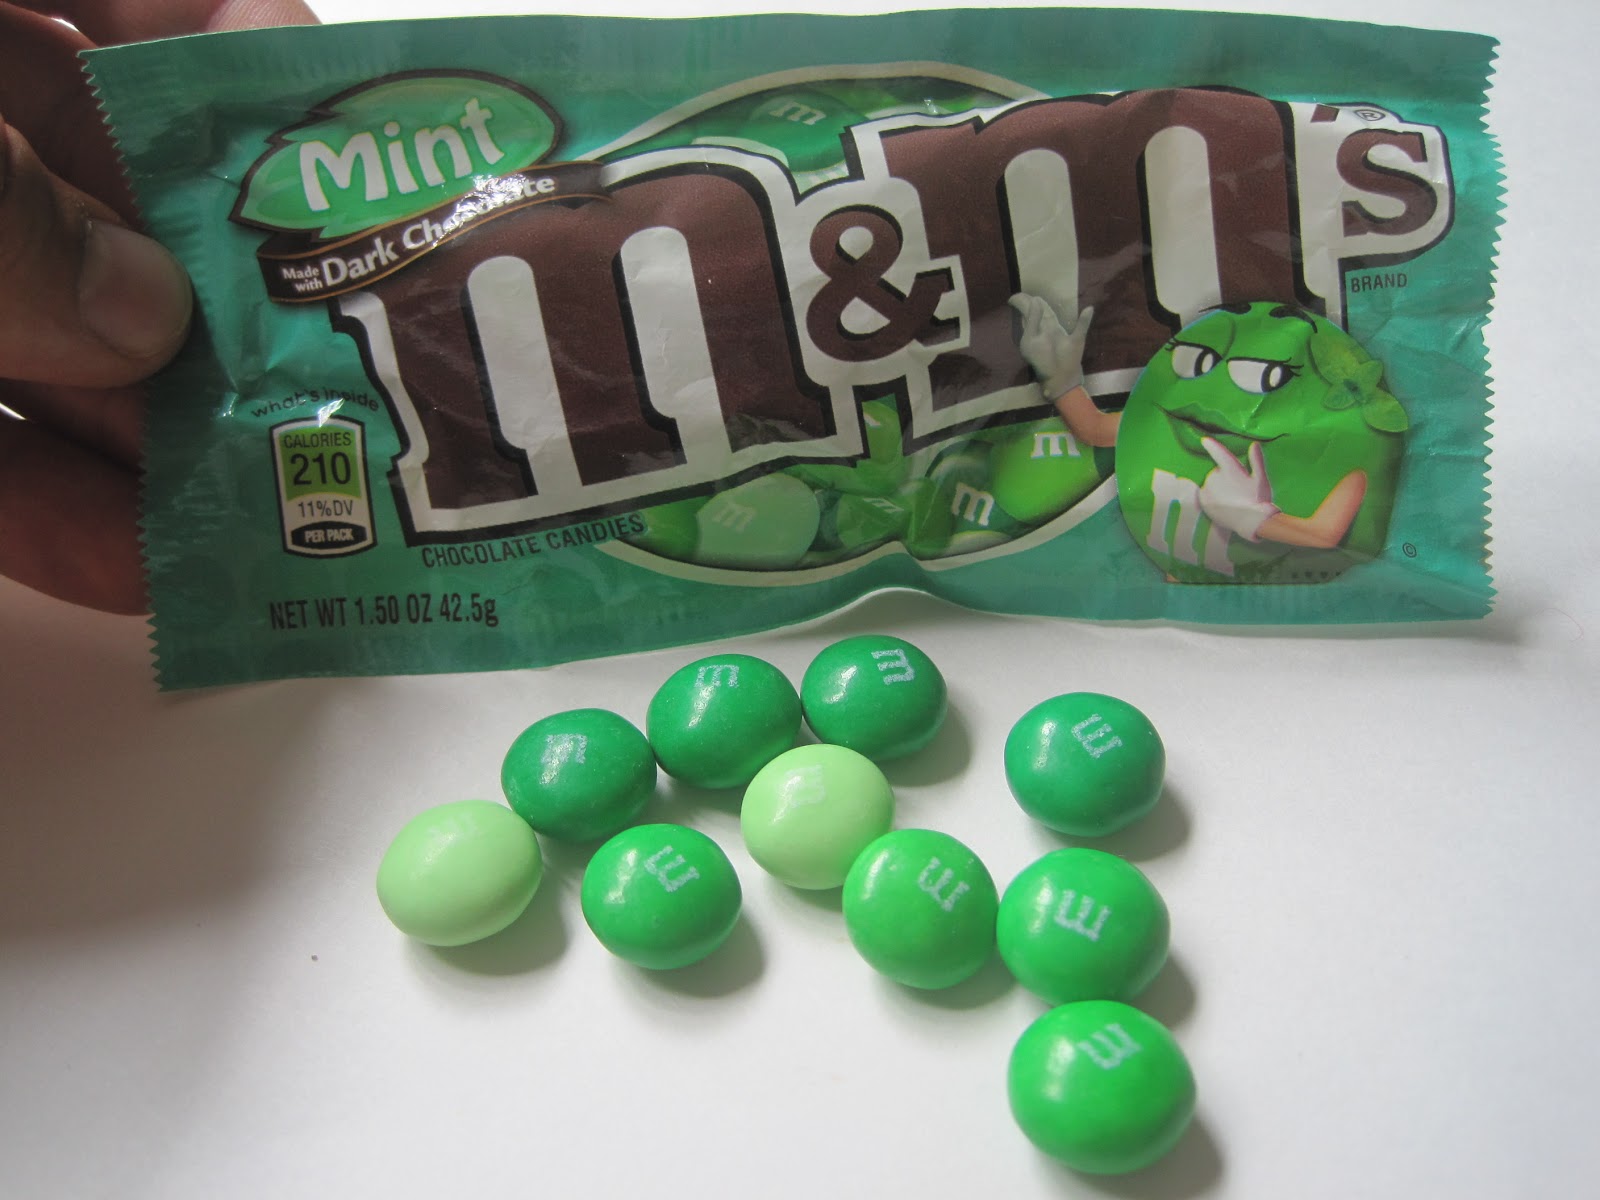 m&m mint dark chocolate